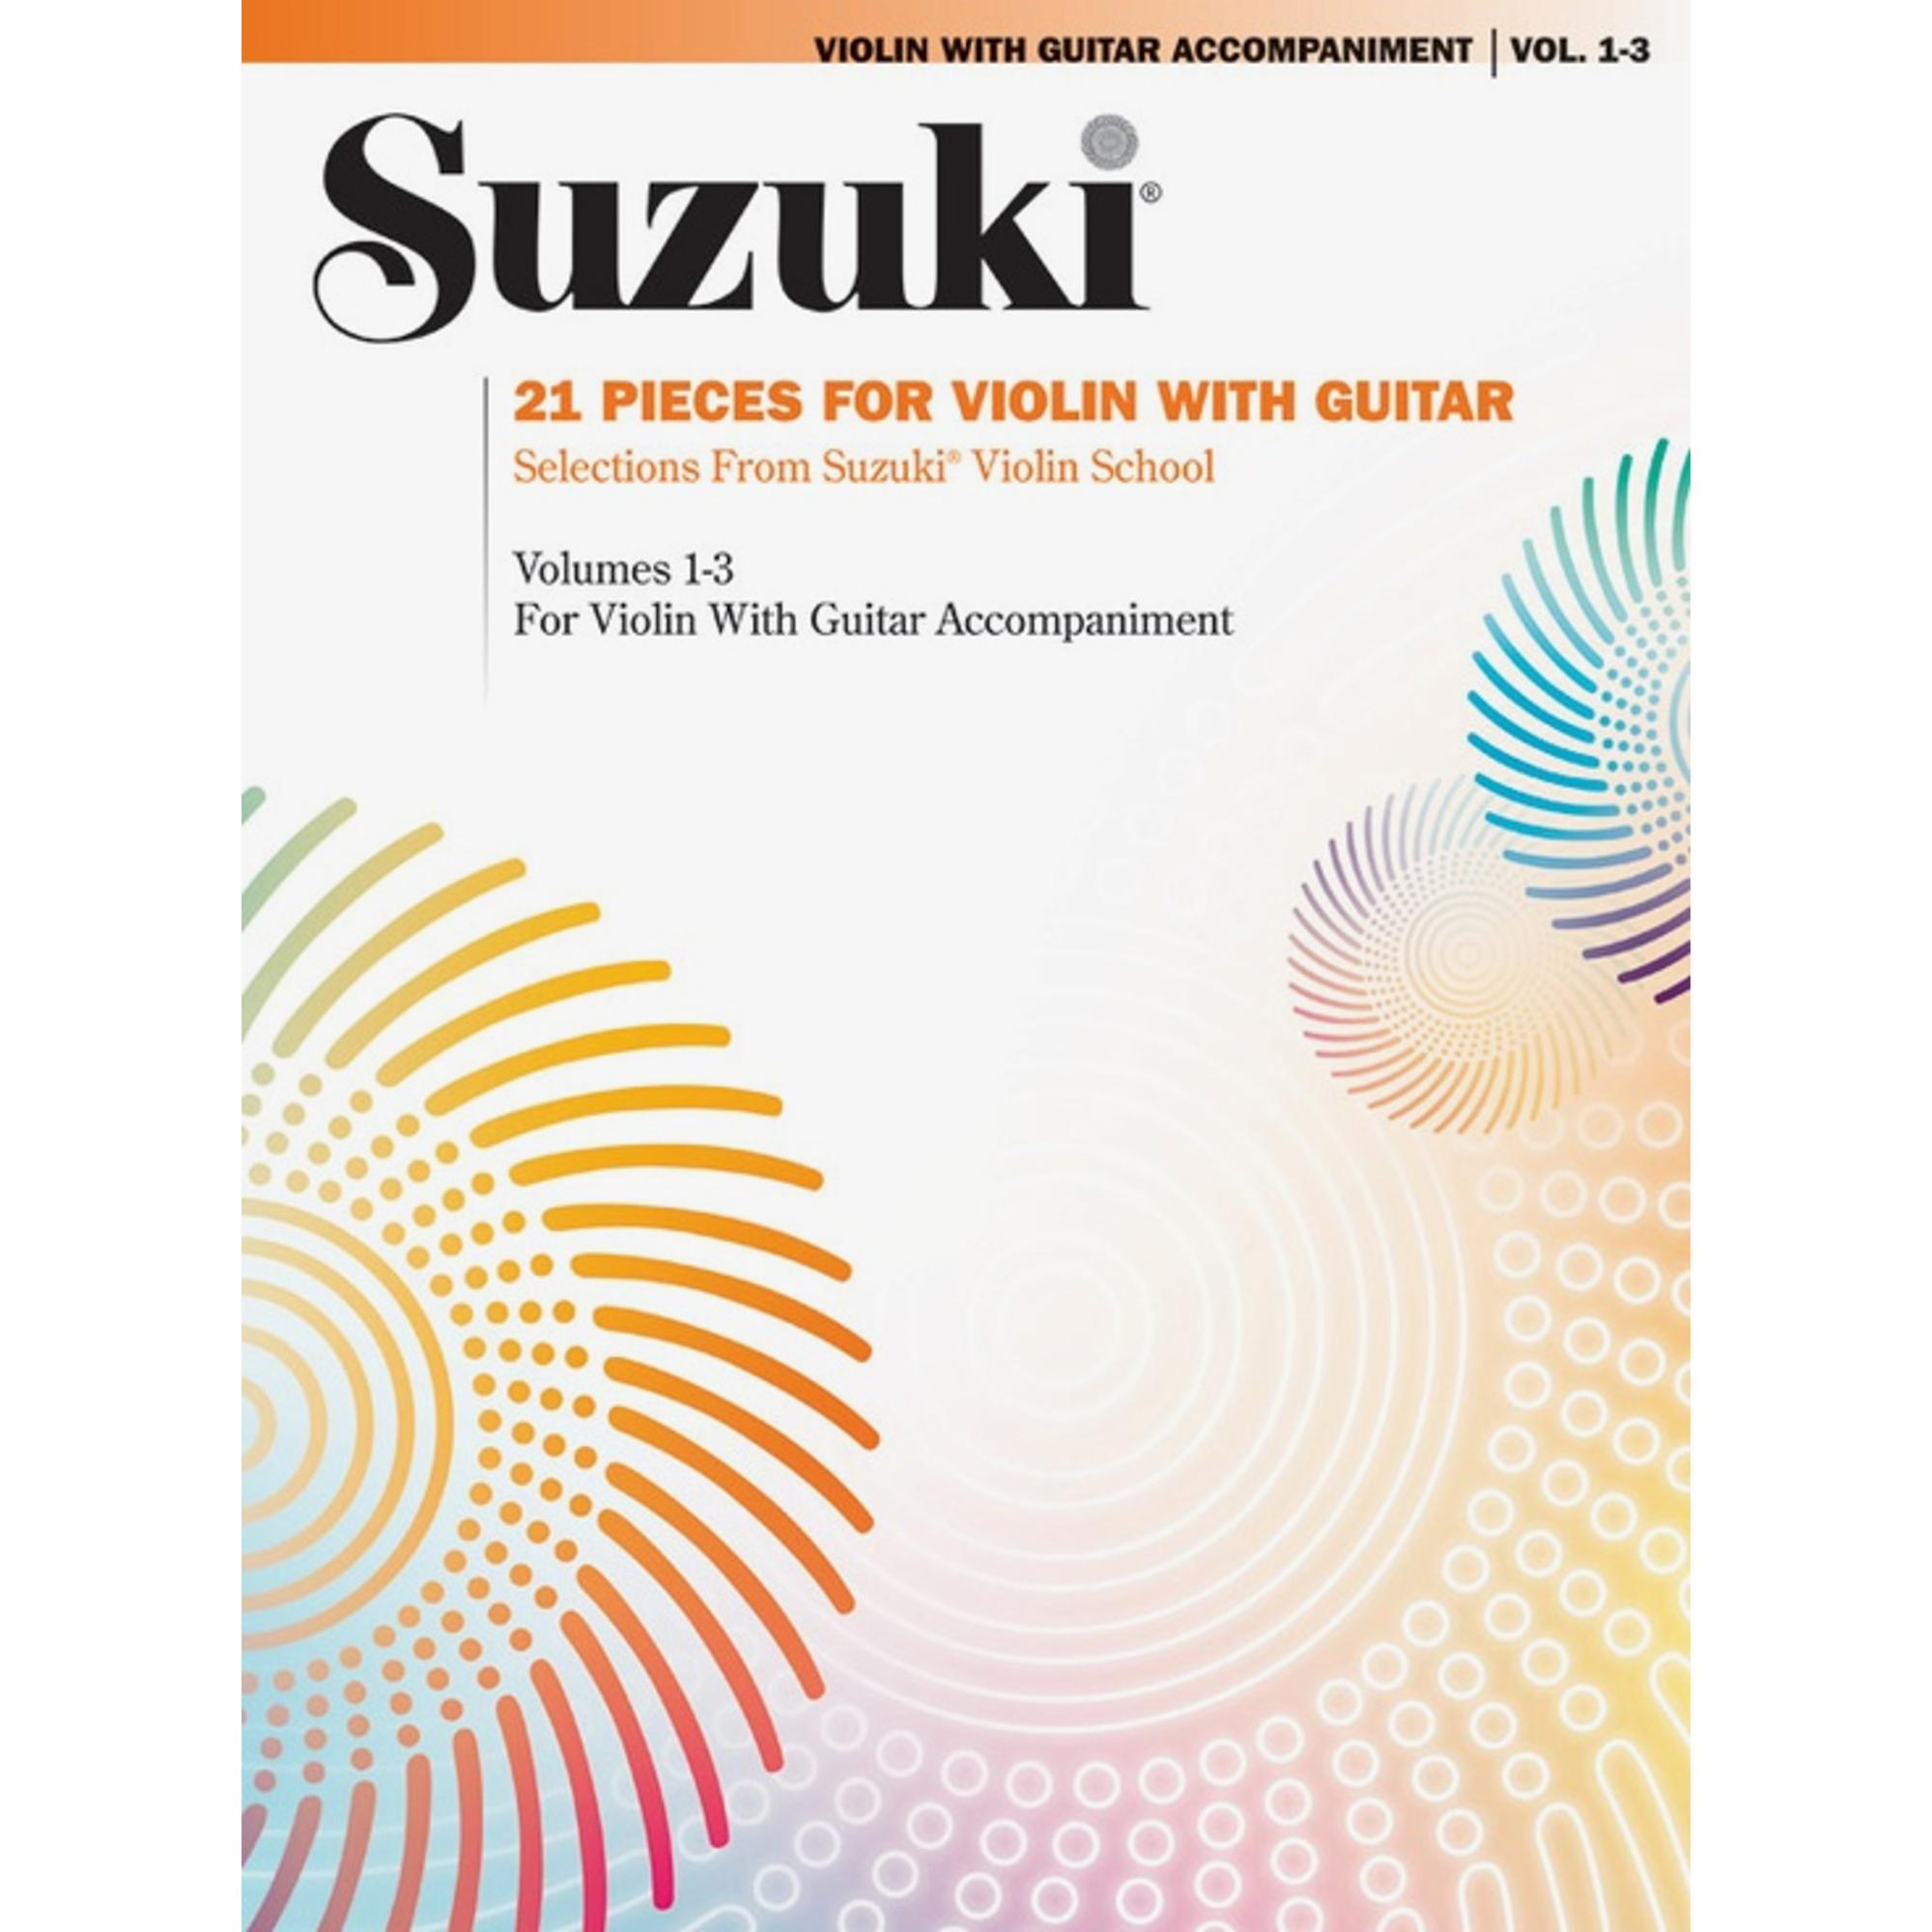 Suzuki: 21 Pieces for Violin with Guitar